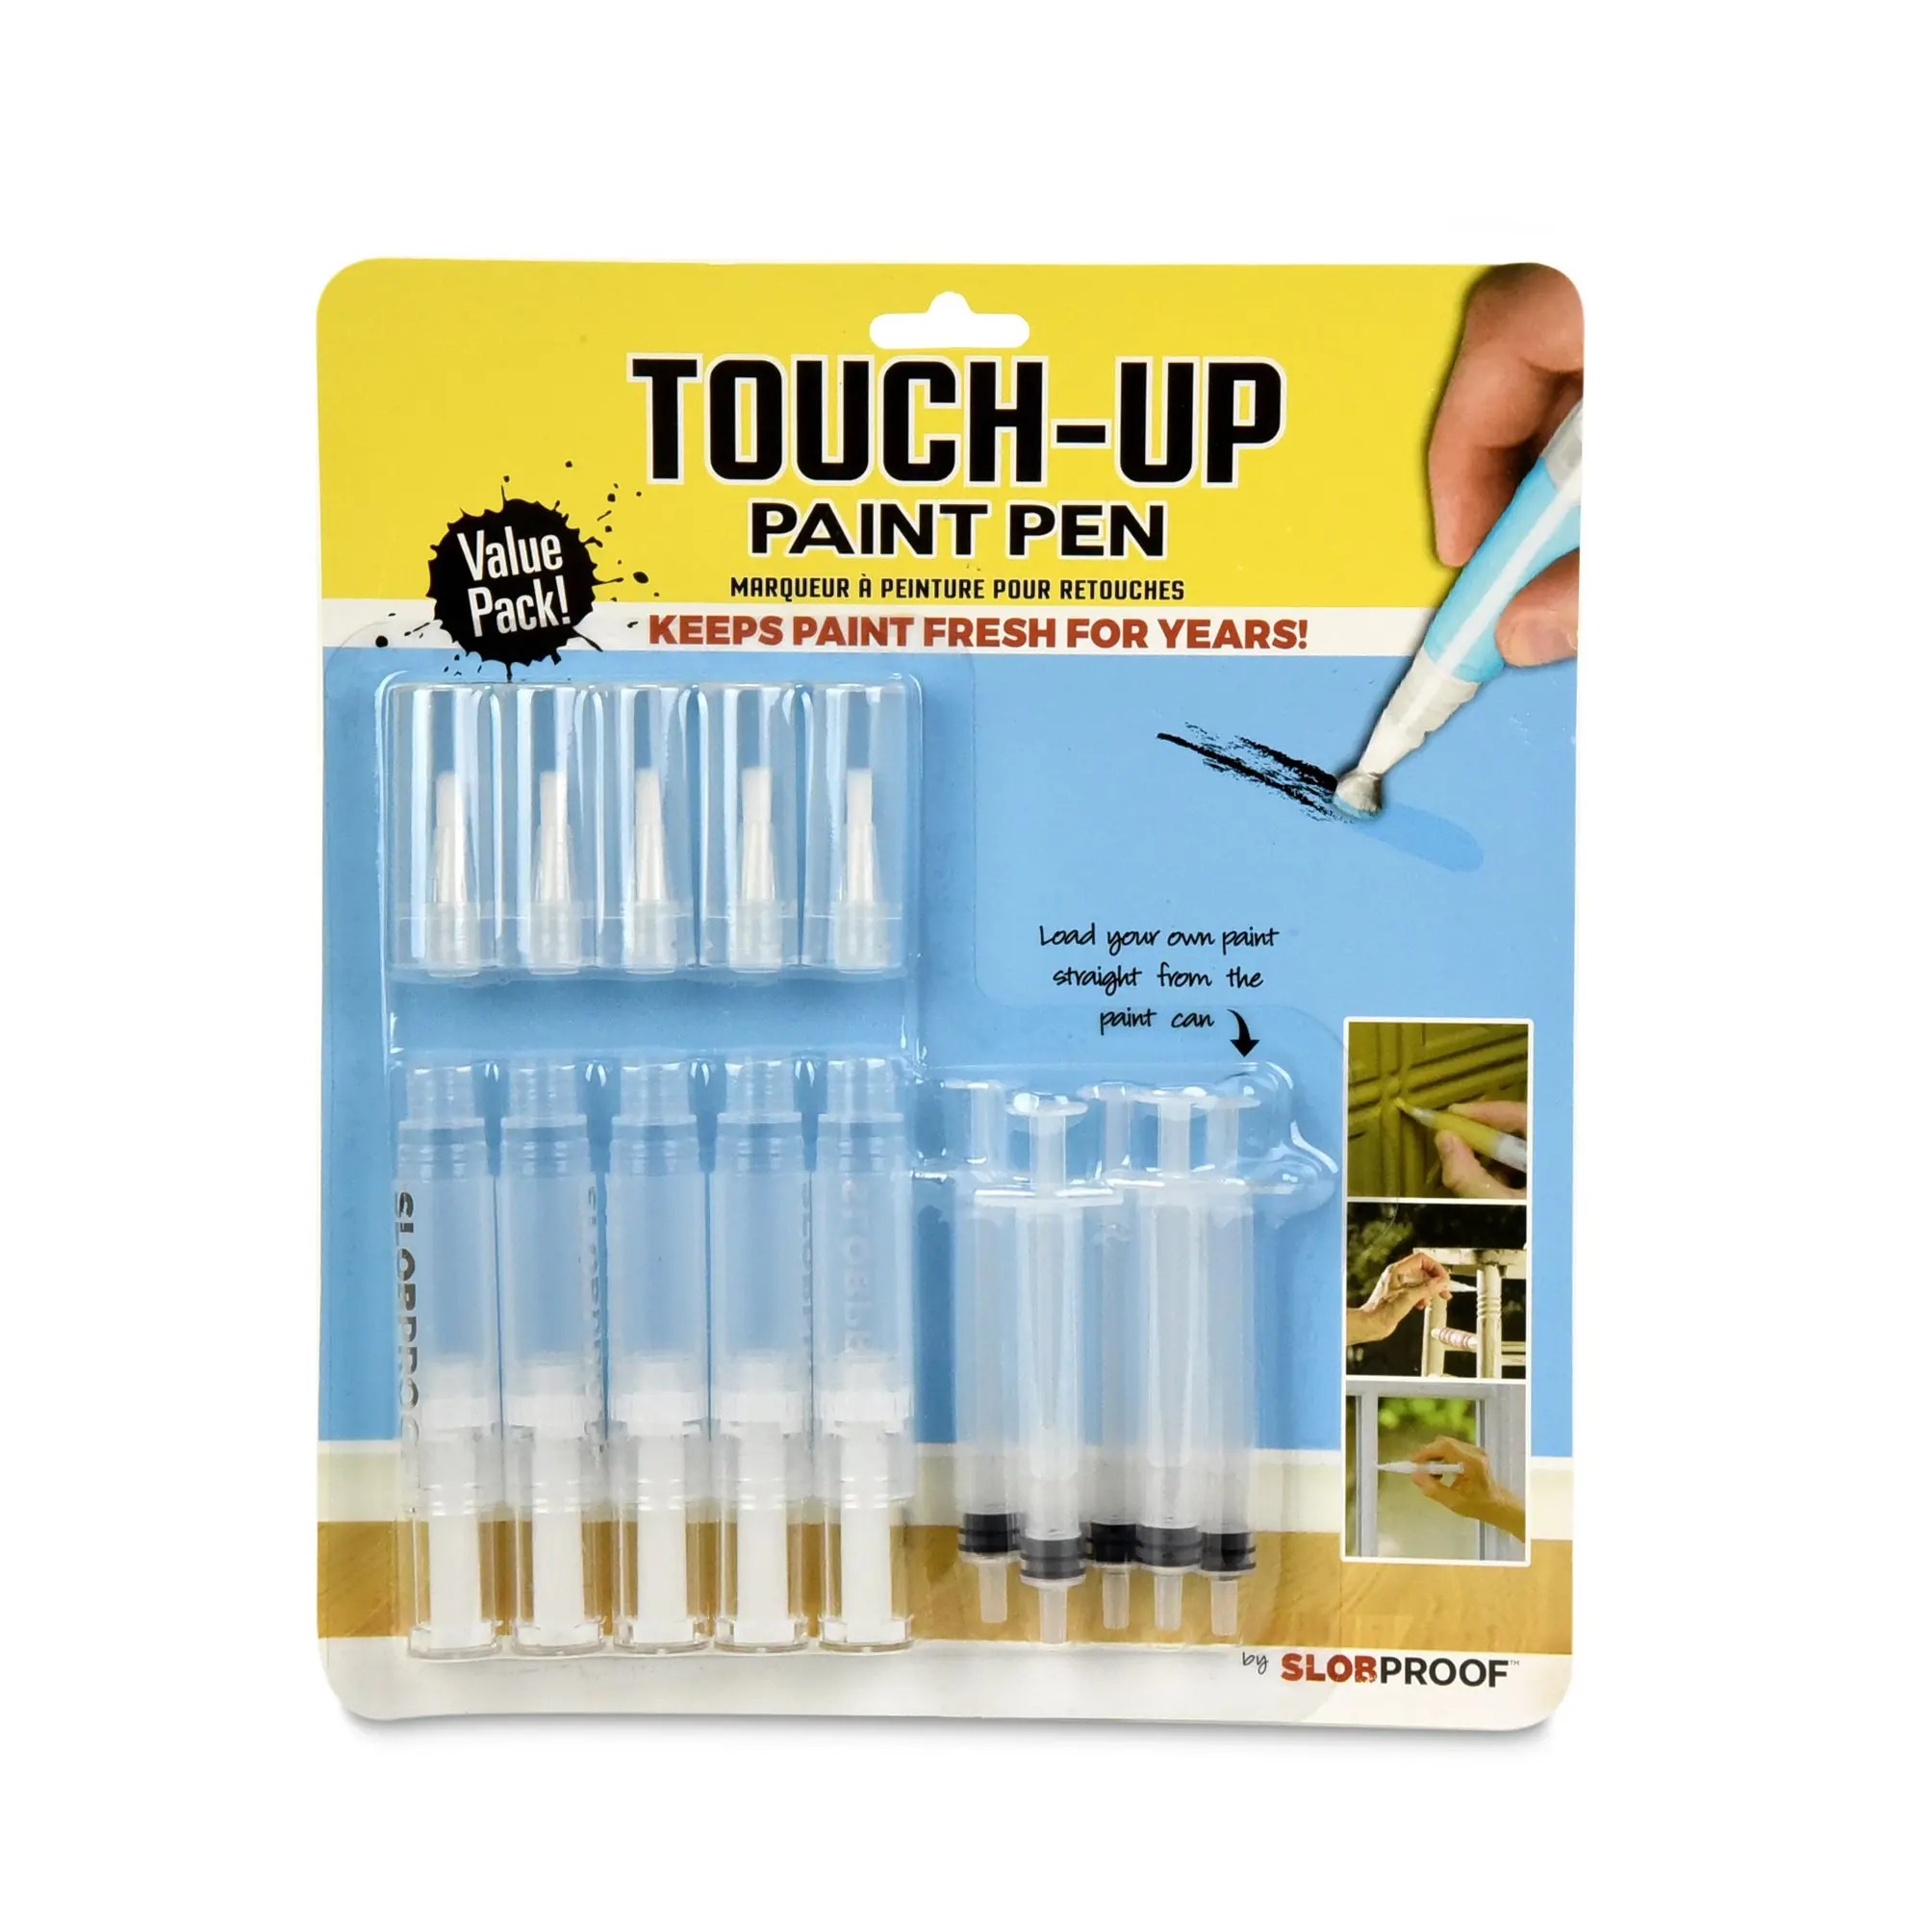 Cheap Touch Up Paint Pen Find Touch Up Paint Pen Deals On Line At